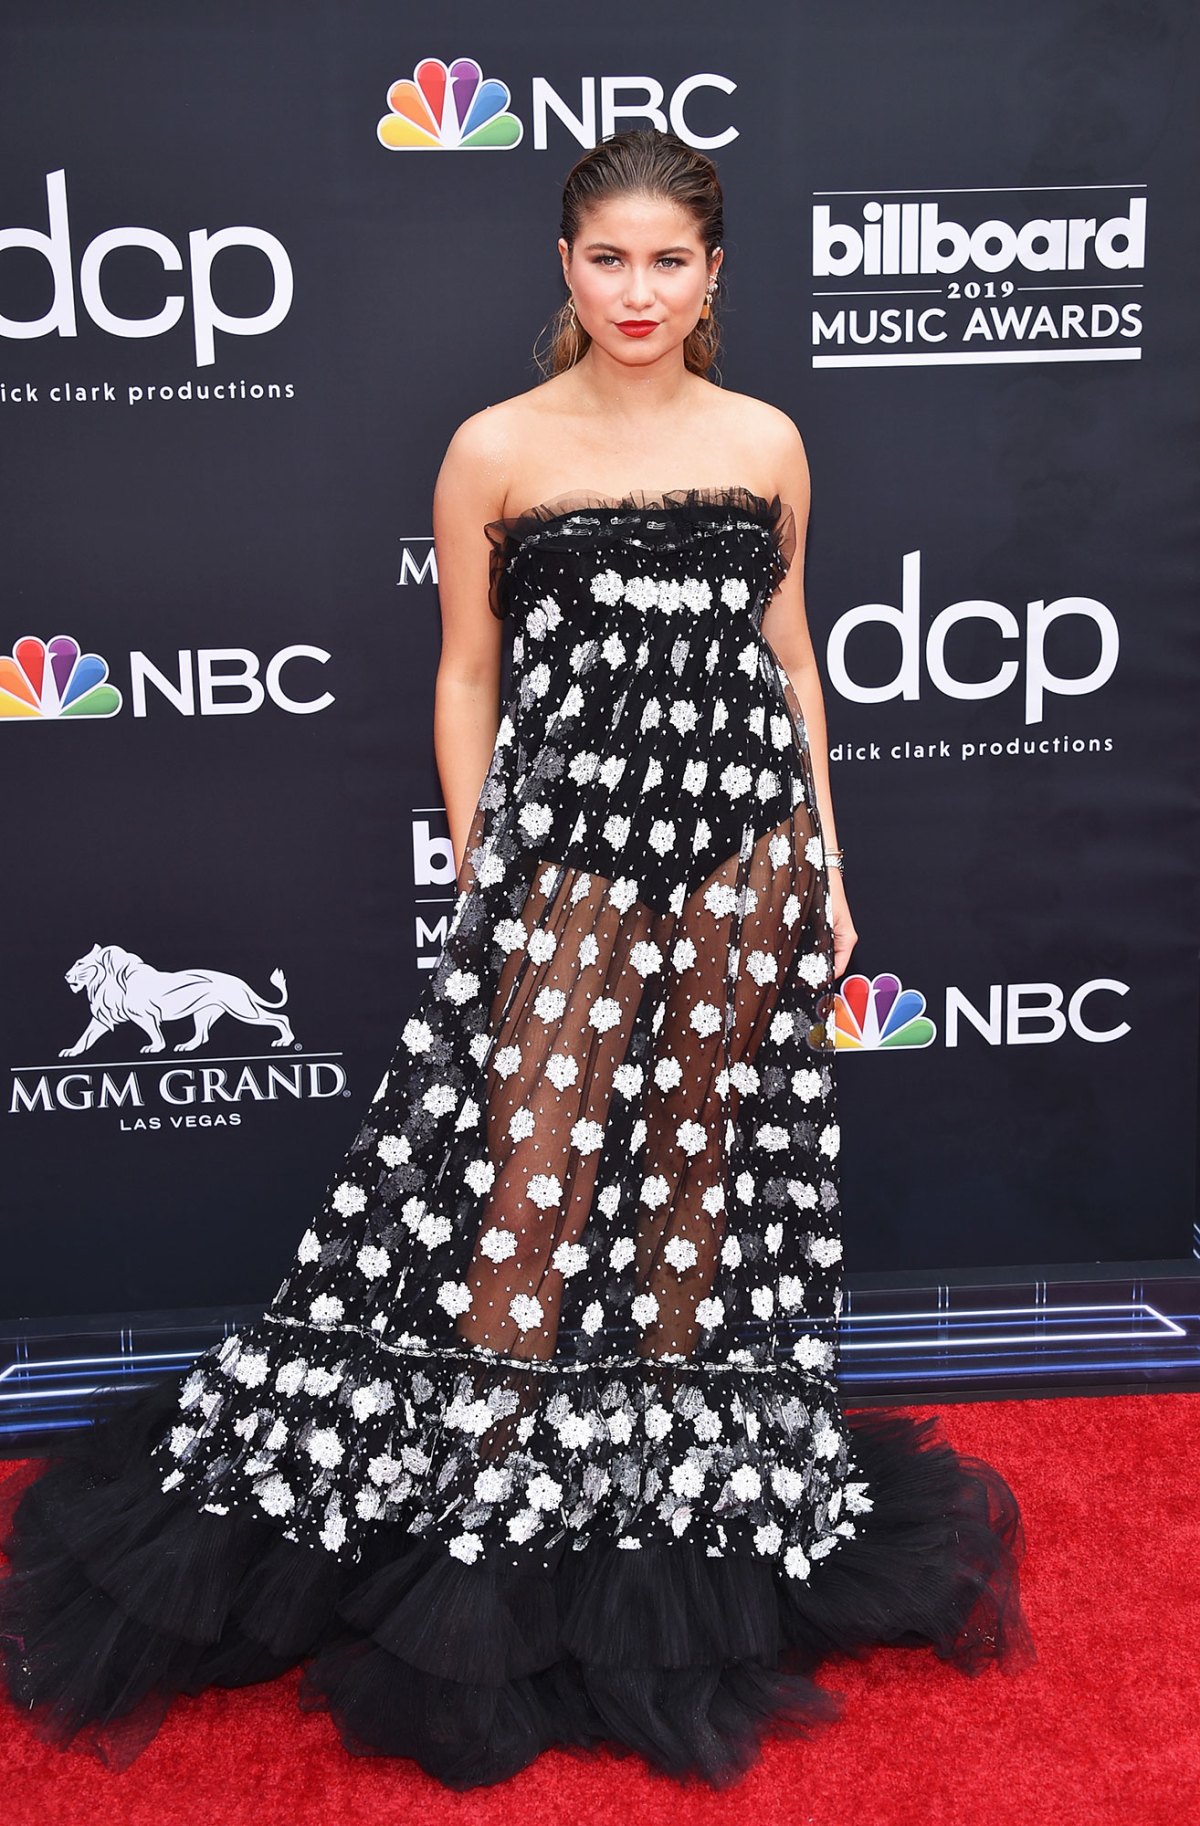 Billboard Music Awards 2019 Red Carpet Fashion See Celeb